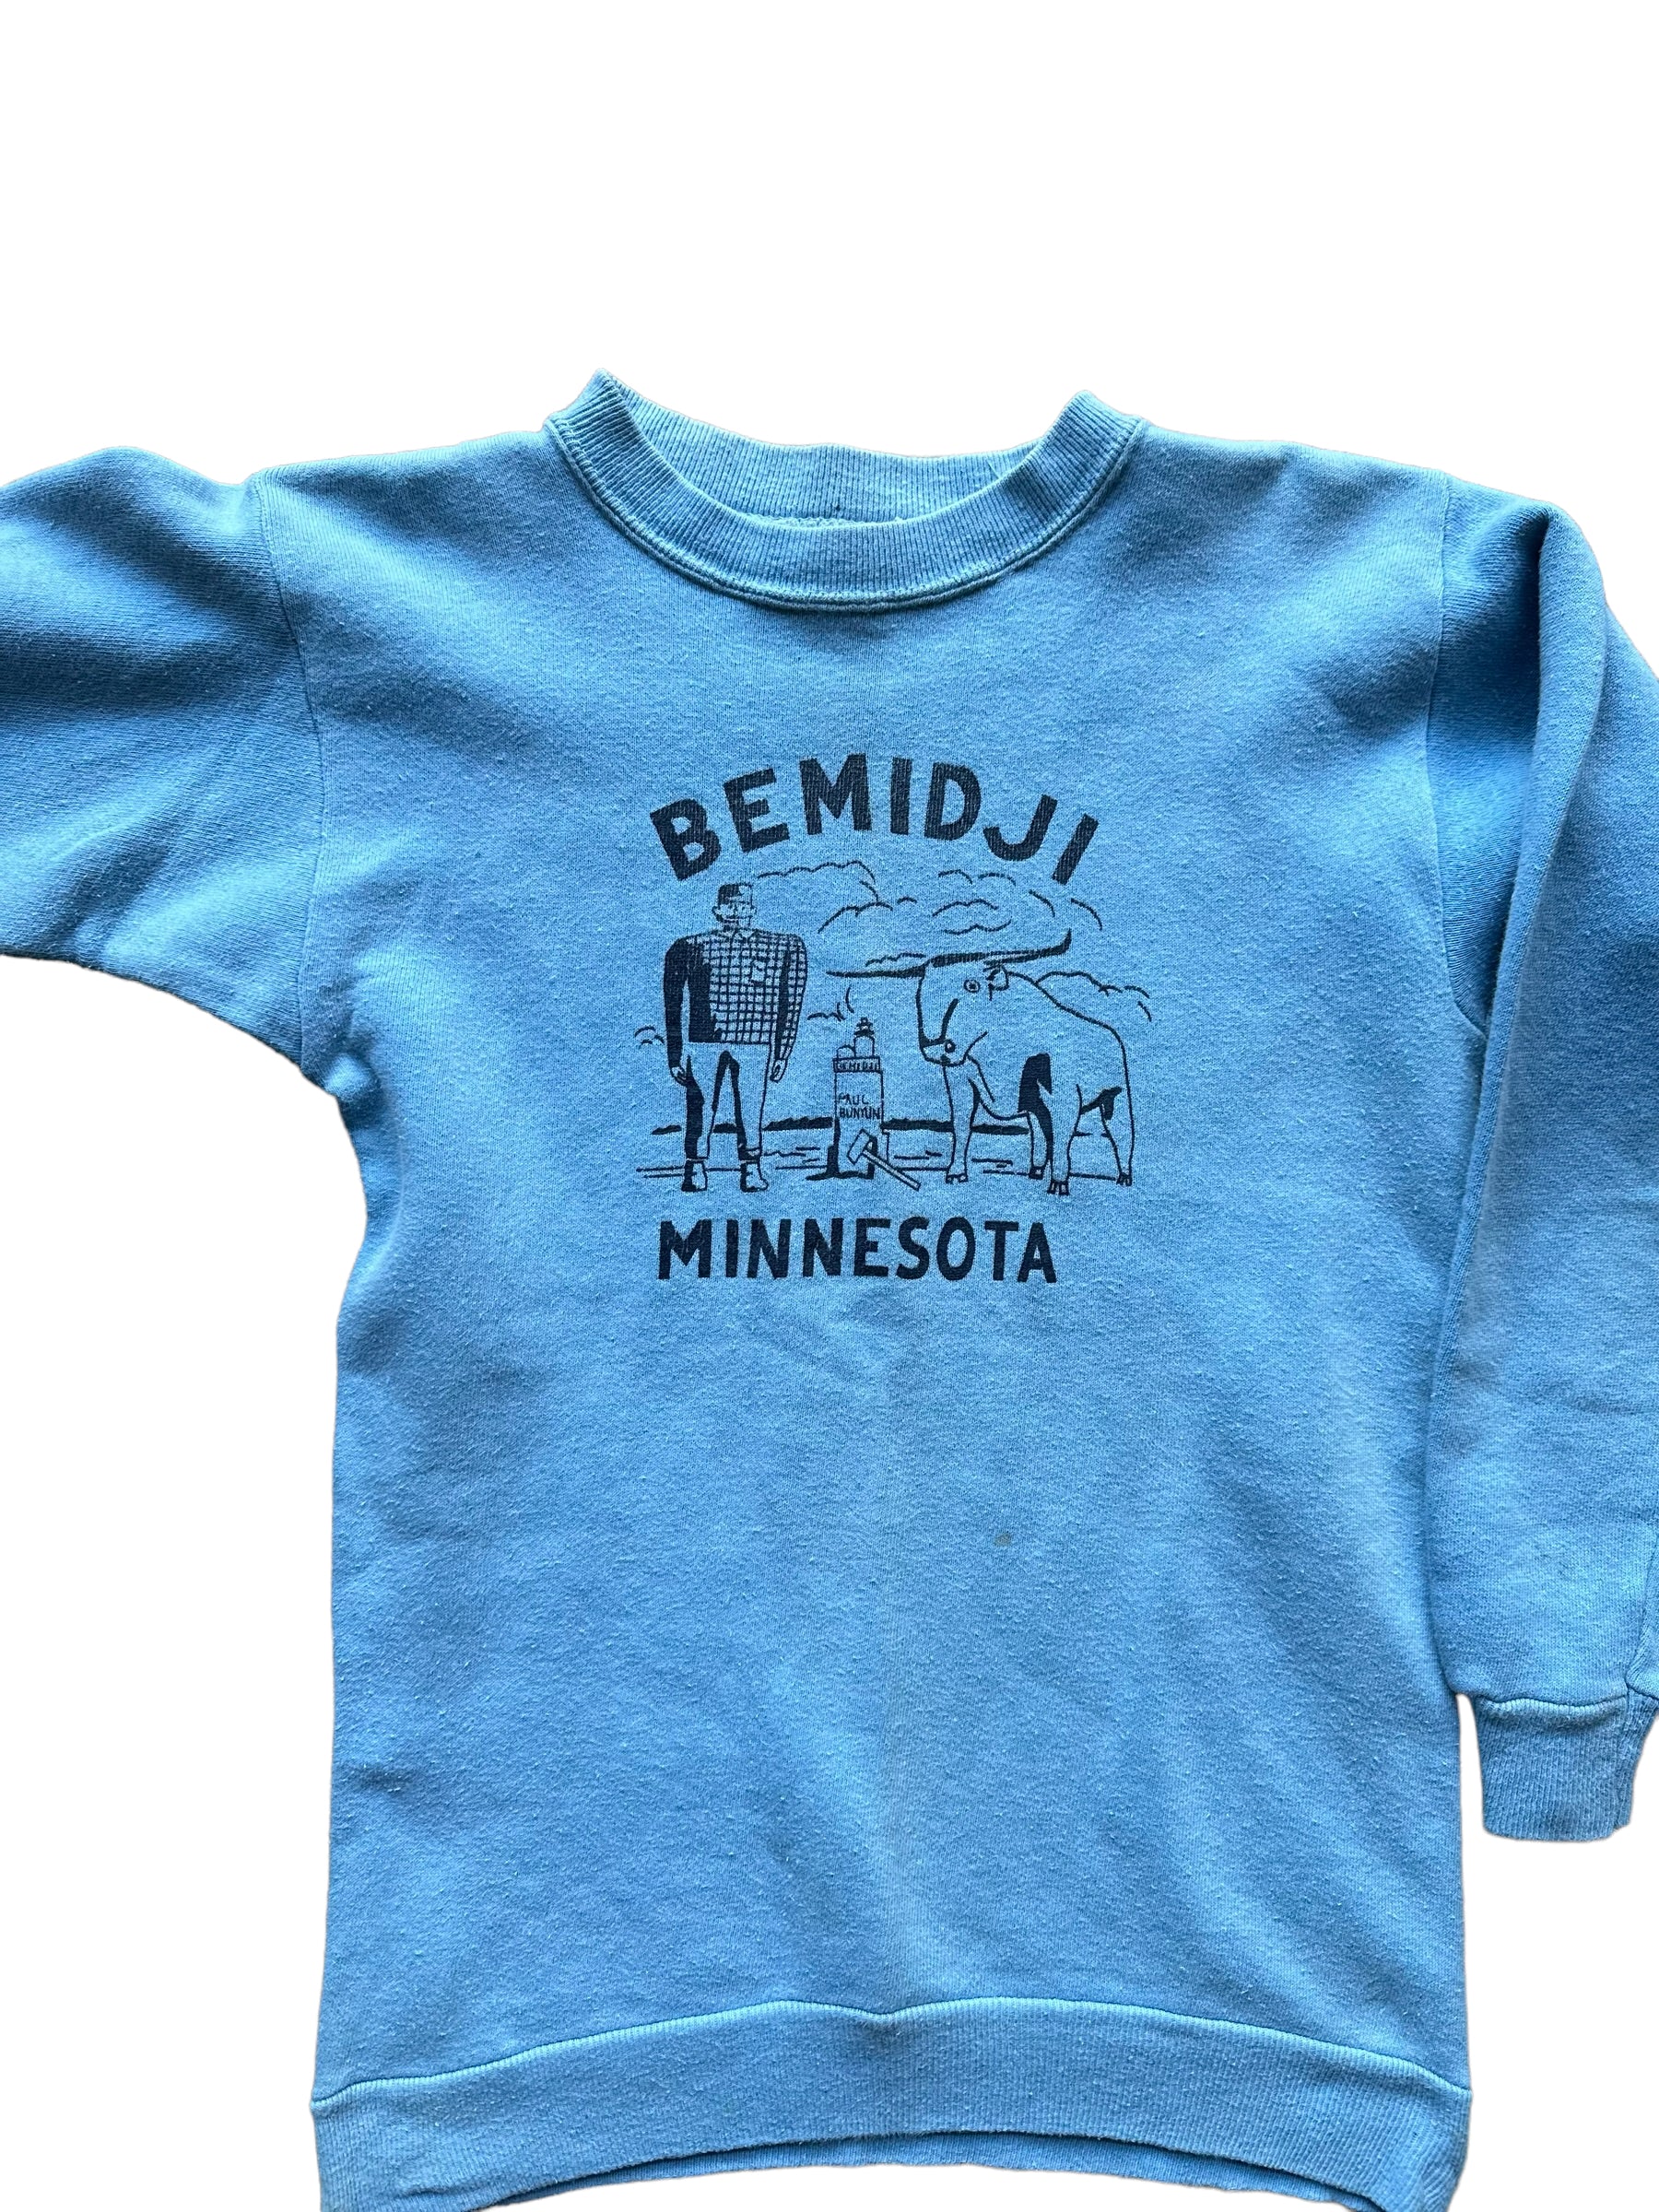 Additional Front View of Vintage Bemidji Crewneck Sweatshirt |  Seattle Vintage Workwear